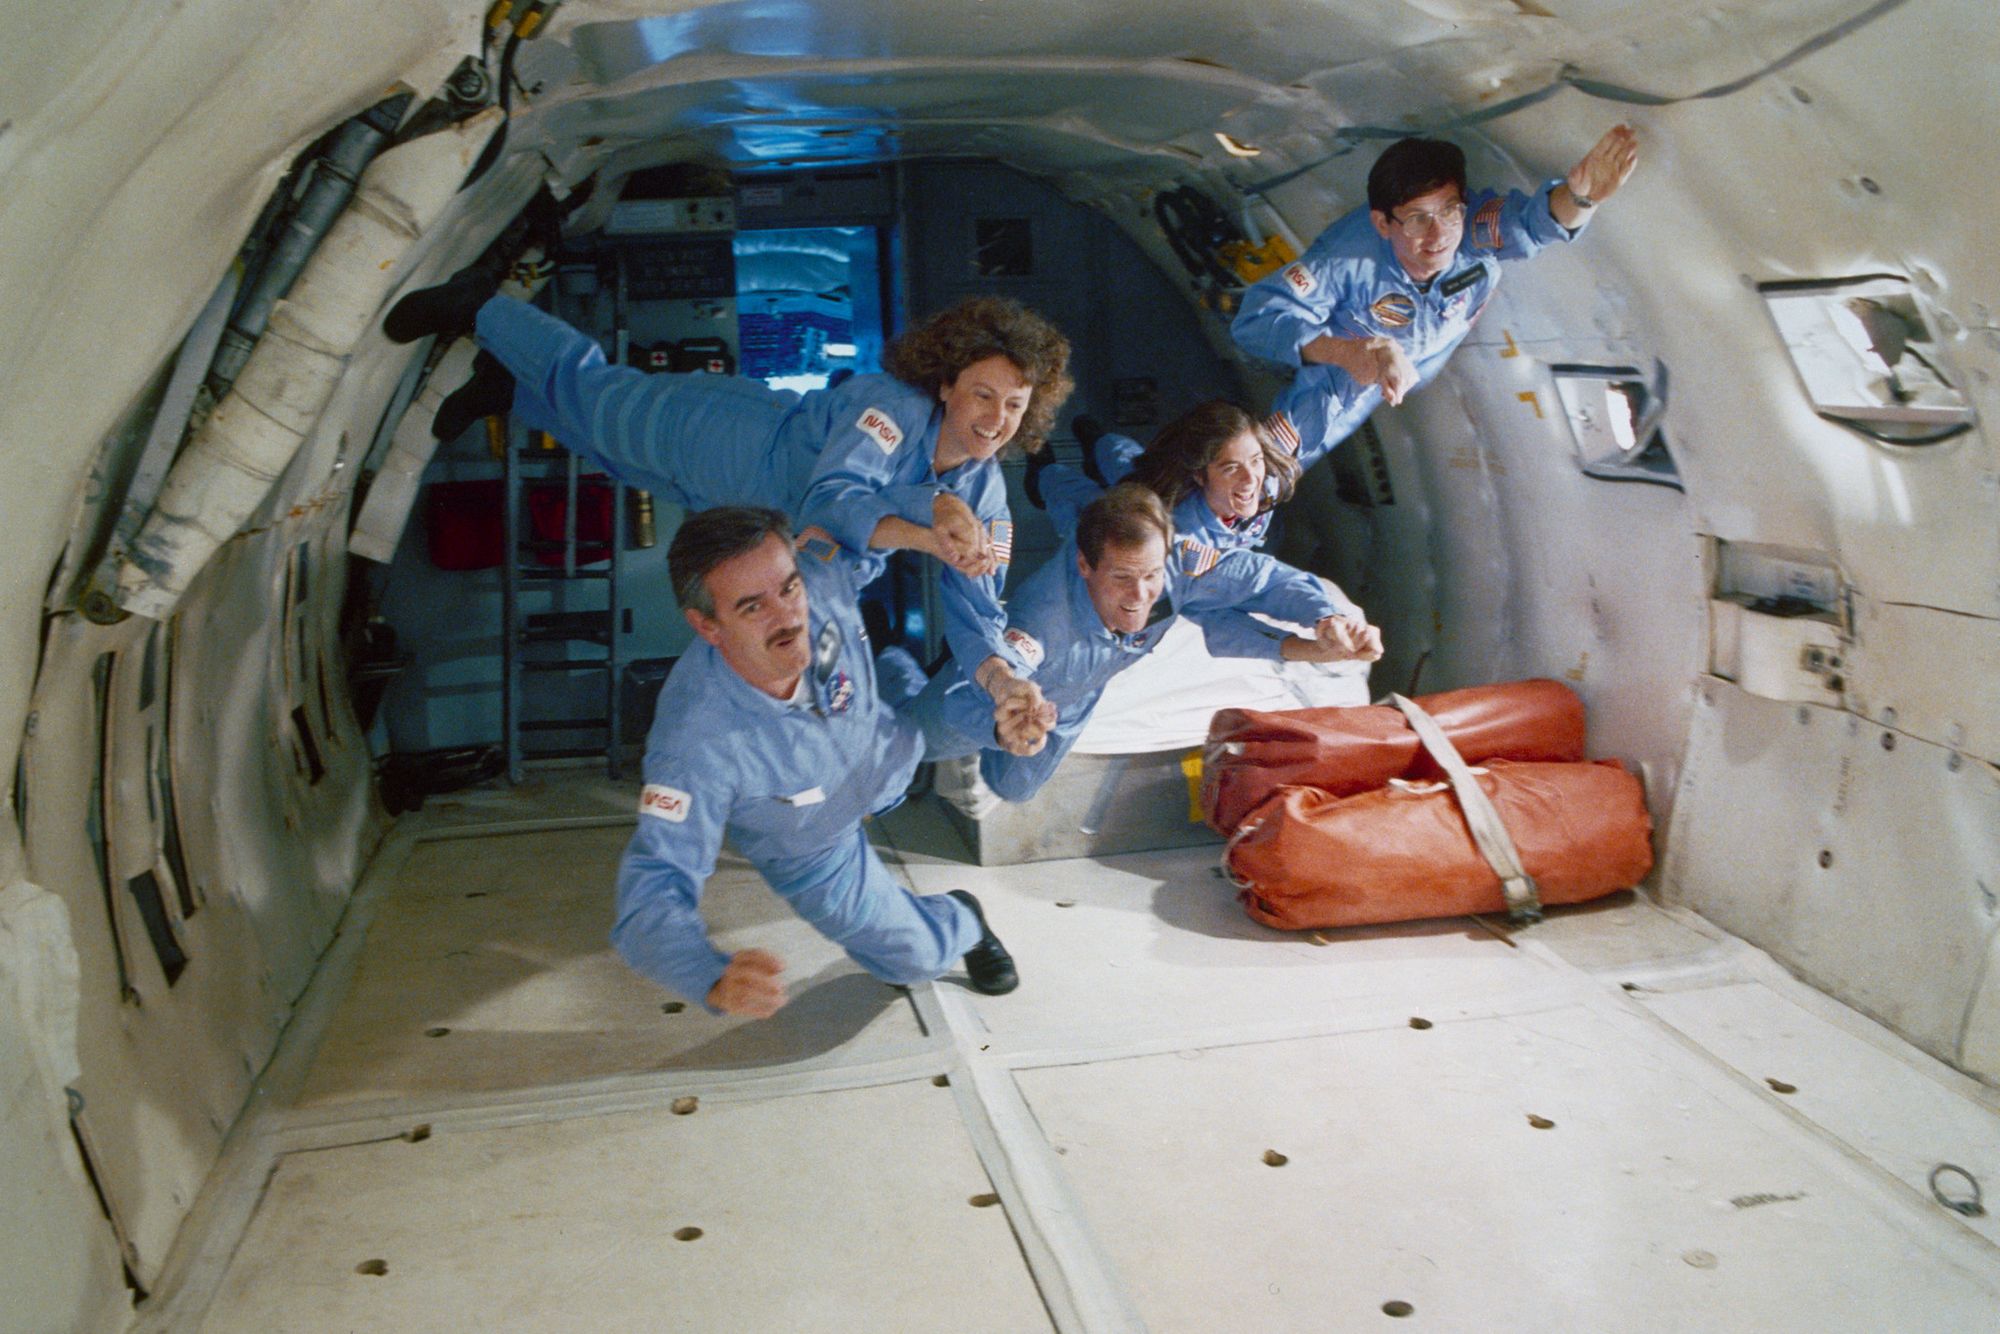 Astronaut/Teacher Christa McAuliffe (center) and Crew Mates Training on NASA's KSC-135 ("The Vomit Comet"), November 20, 1995 [Credit: NASA]